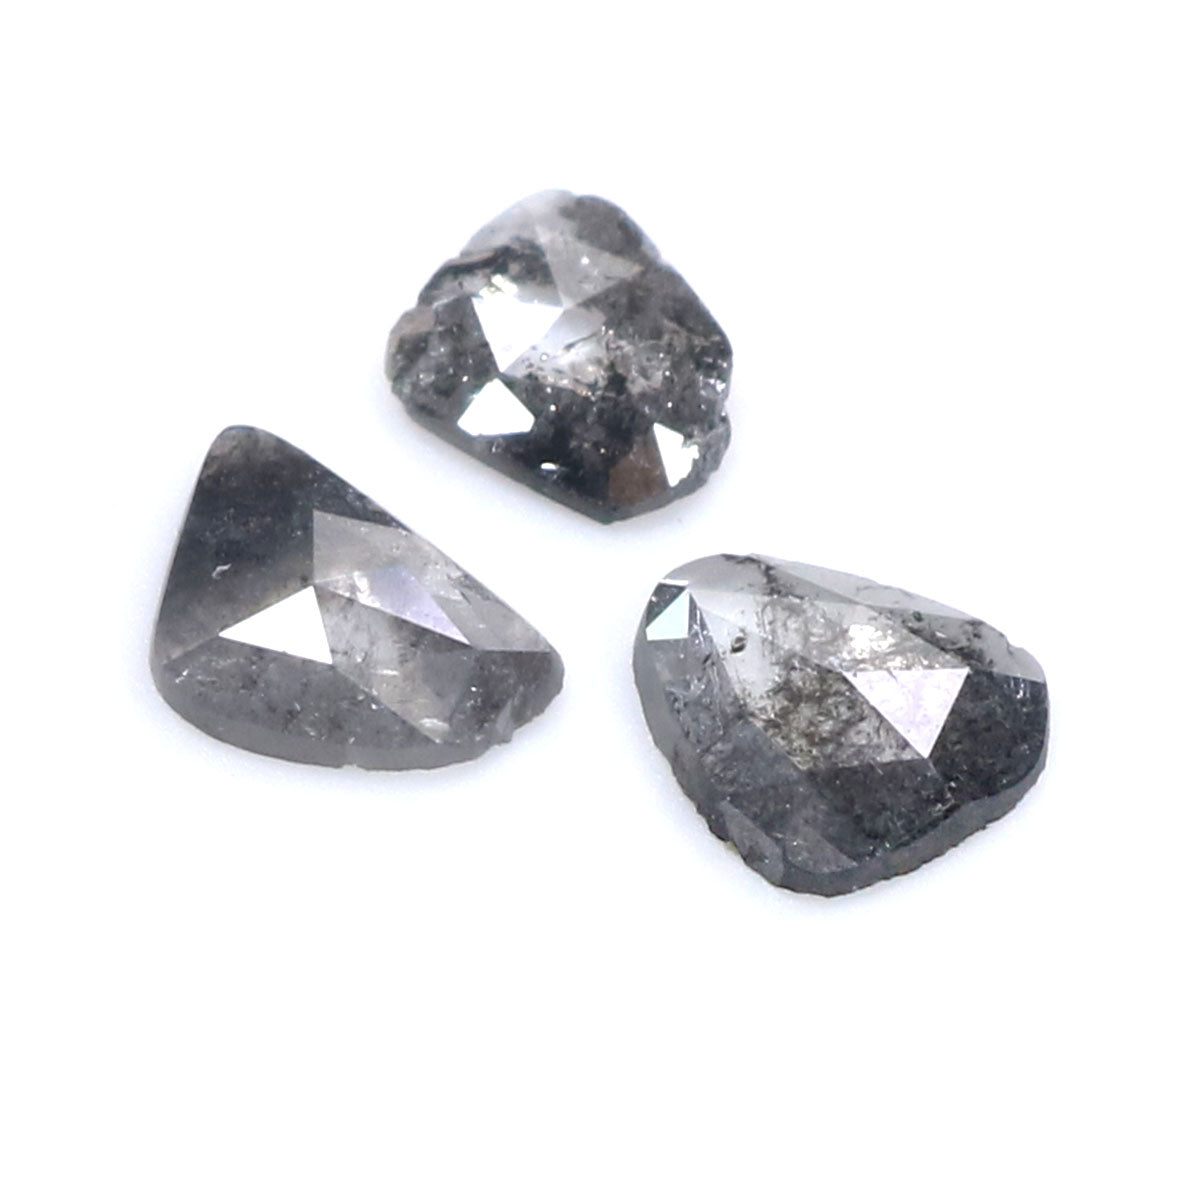 Natural Loose Slice Salt And Pepper Diamond Black Grey Color 0.90 CT 4.90 MM Slice Shape Rose Cut Diamond L1471